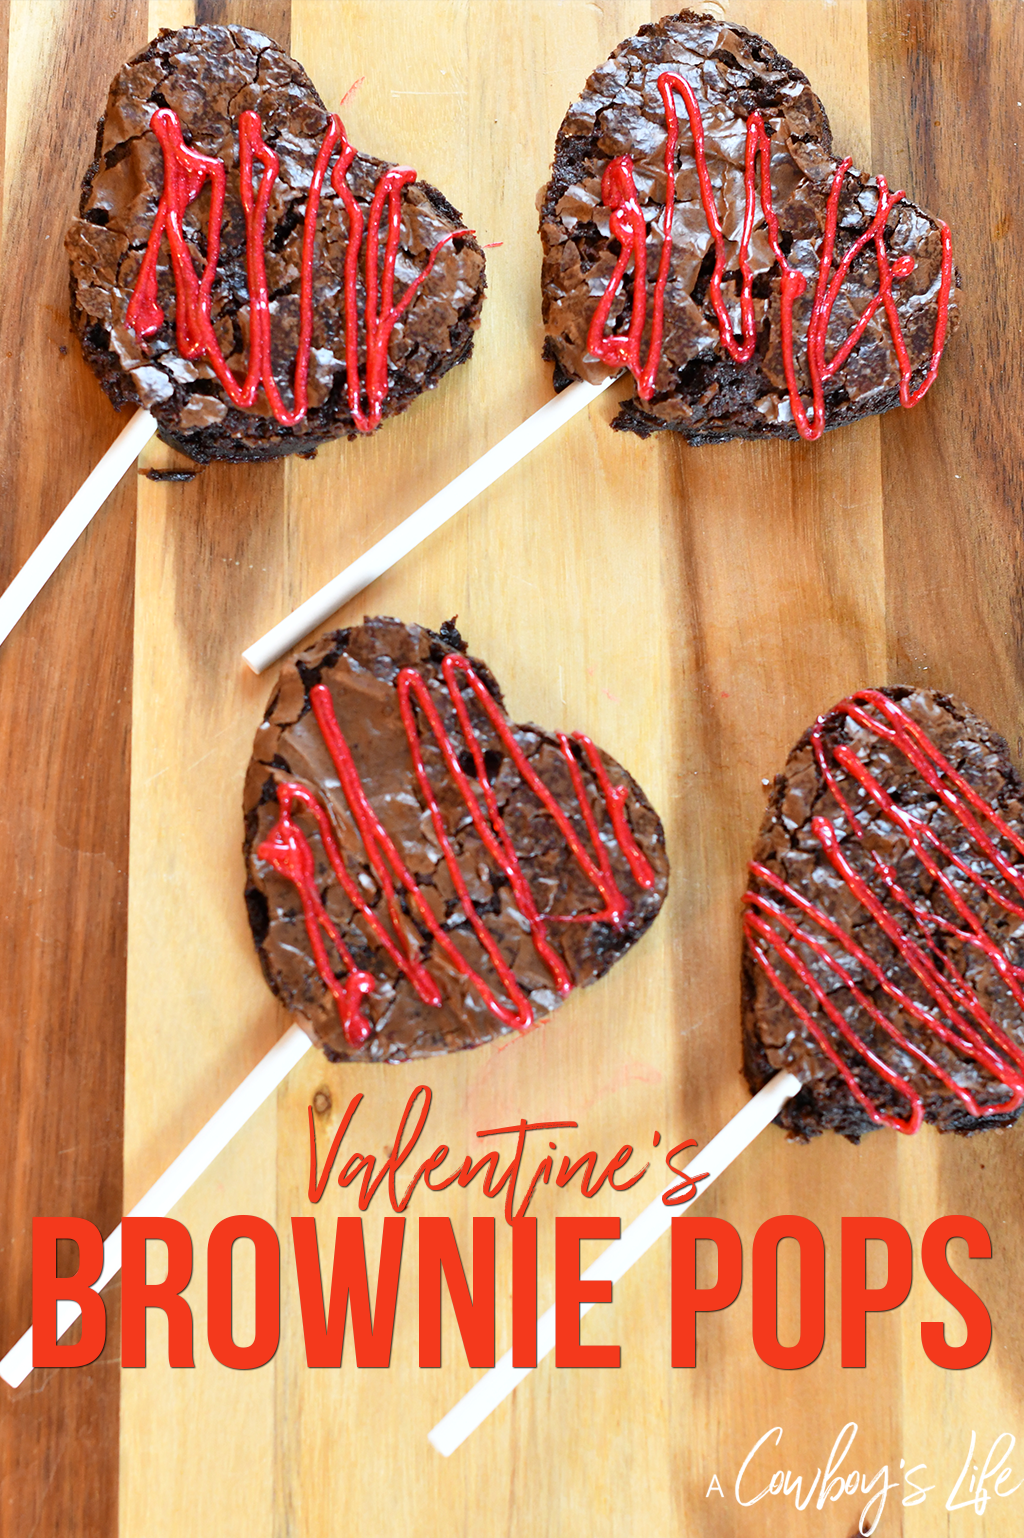 How to make Valentine's Brownie Pops